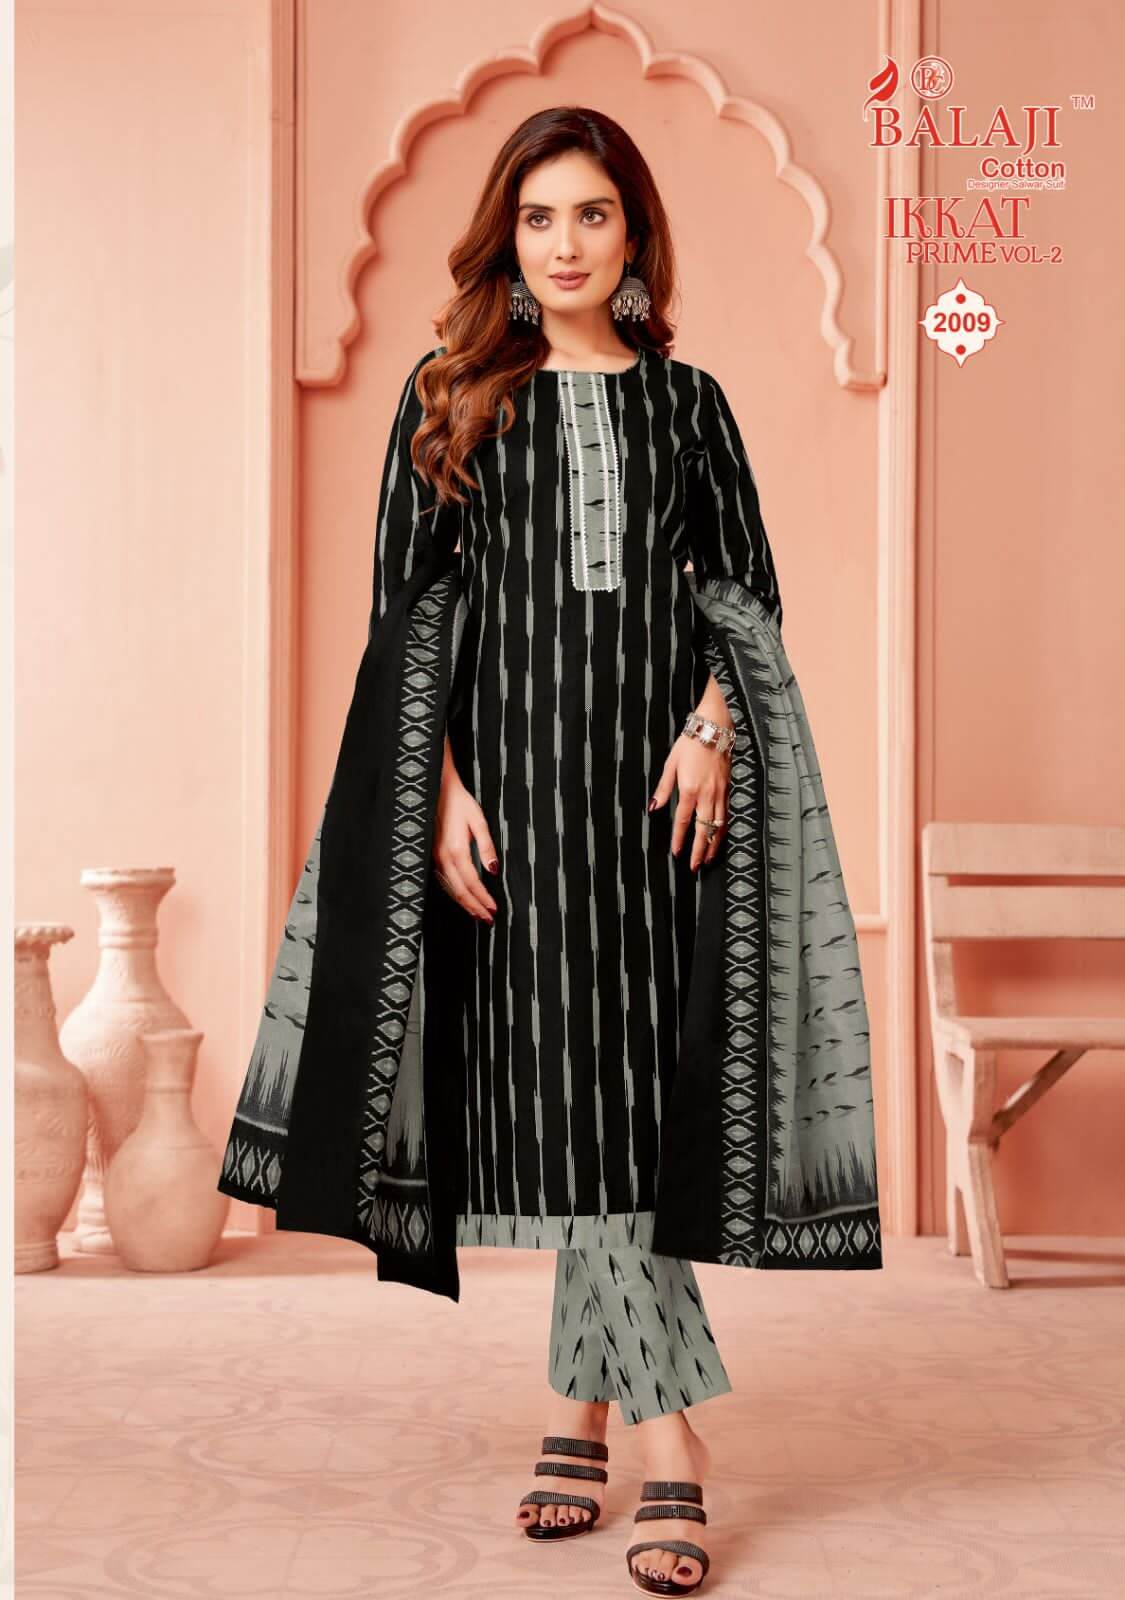 Balaji Cotton Ikkat Prime Vol 2 Readymade Dress Catalog collection 16